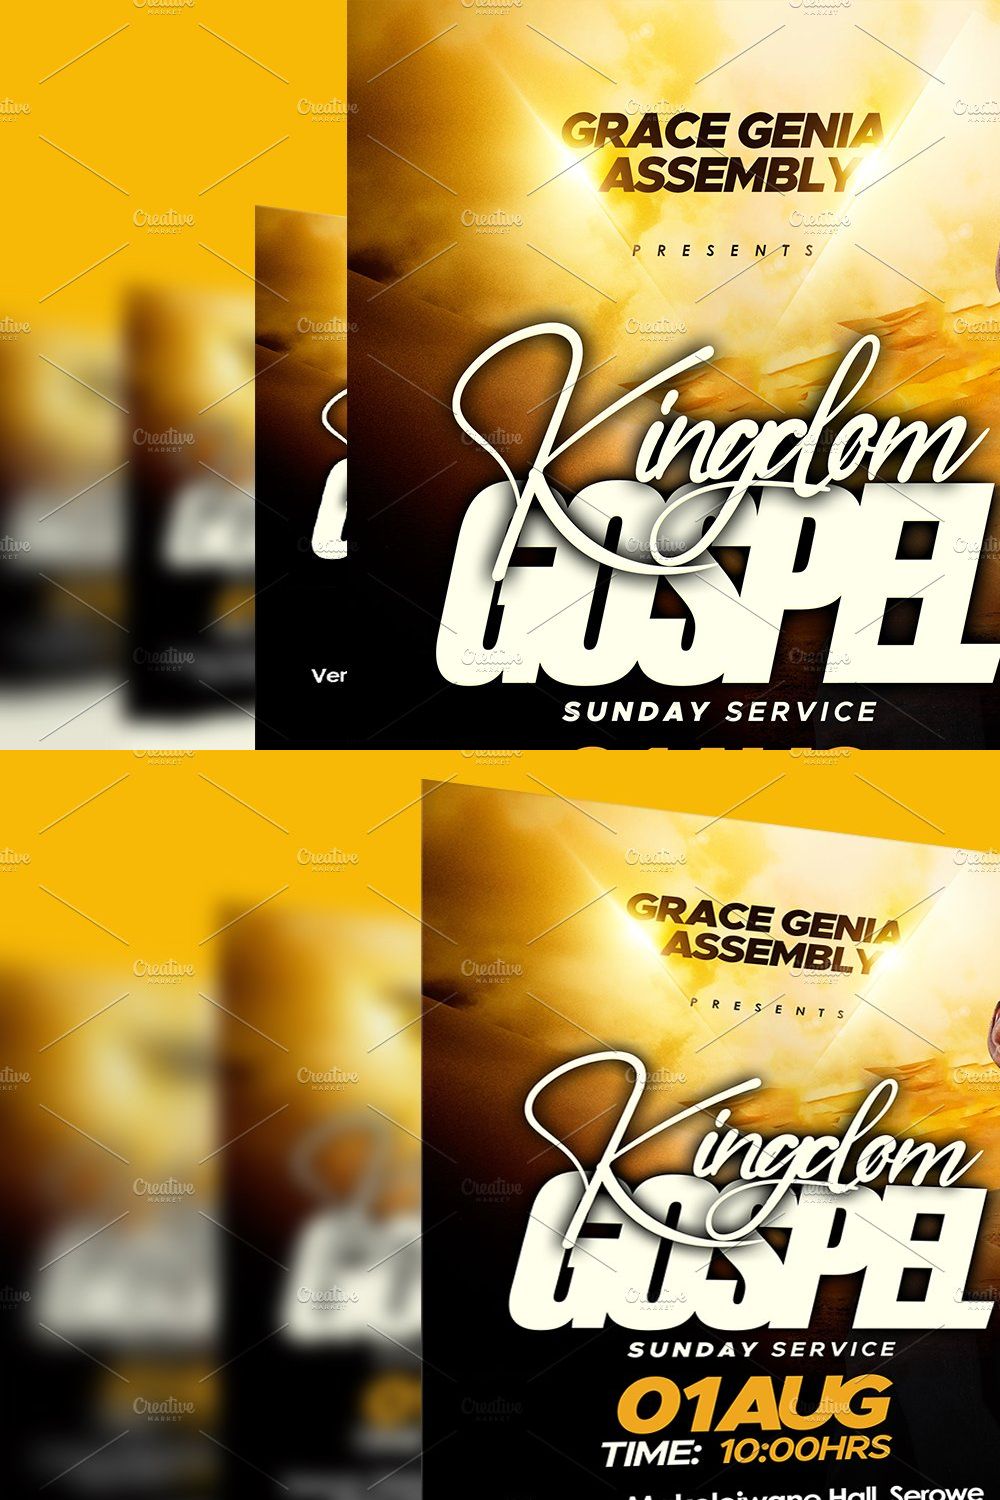 Kingdom gospel church flyer pinterest preview image.